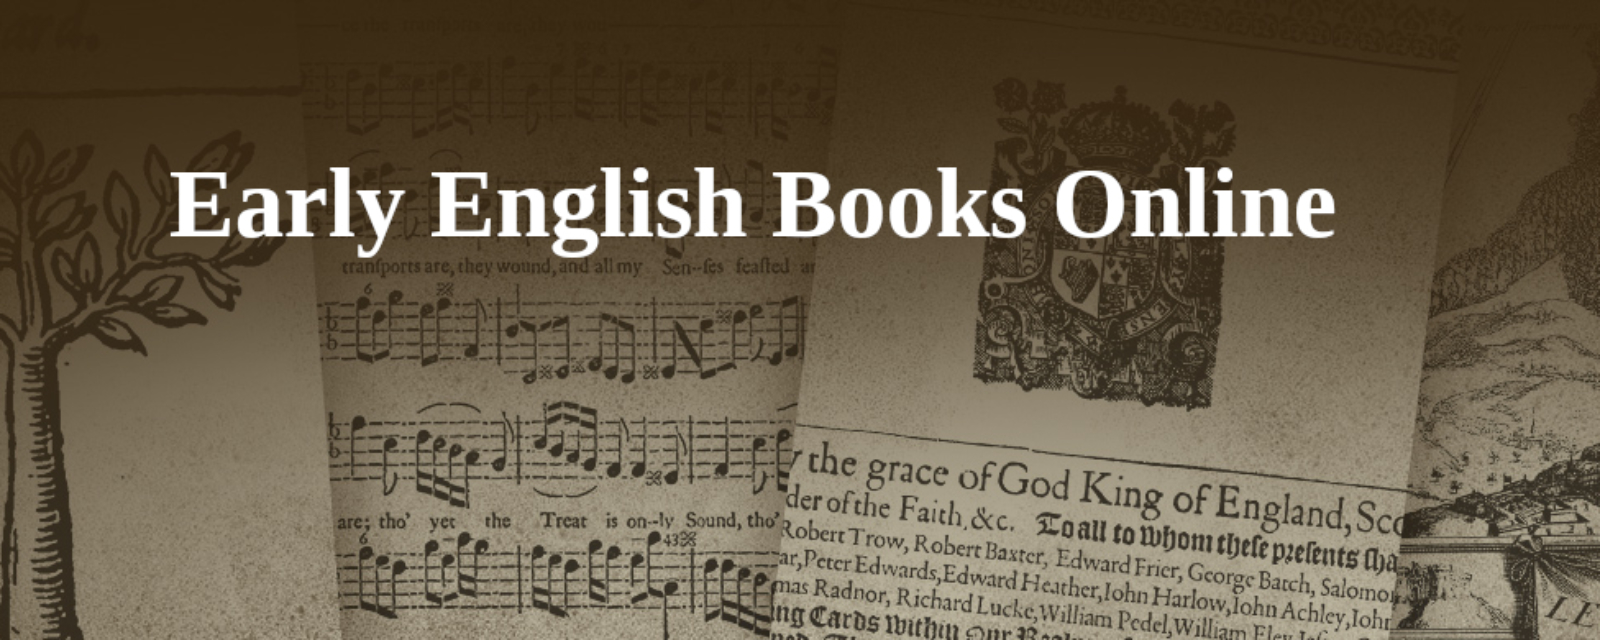 EEBO : Early English Books Online 1